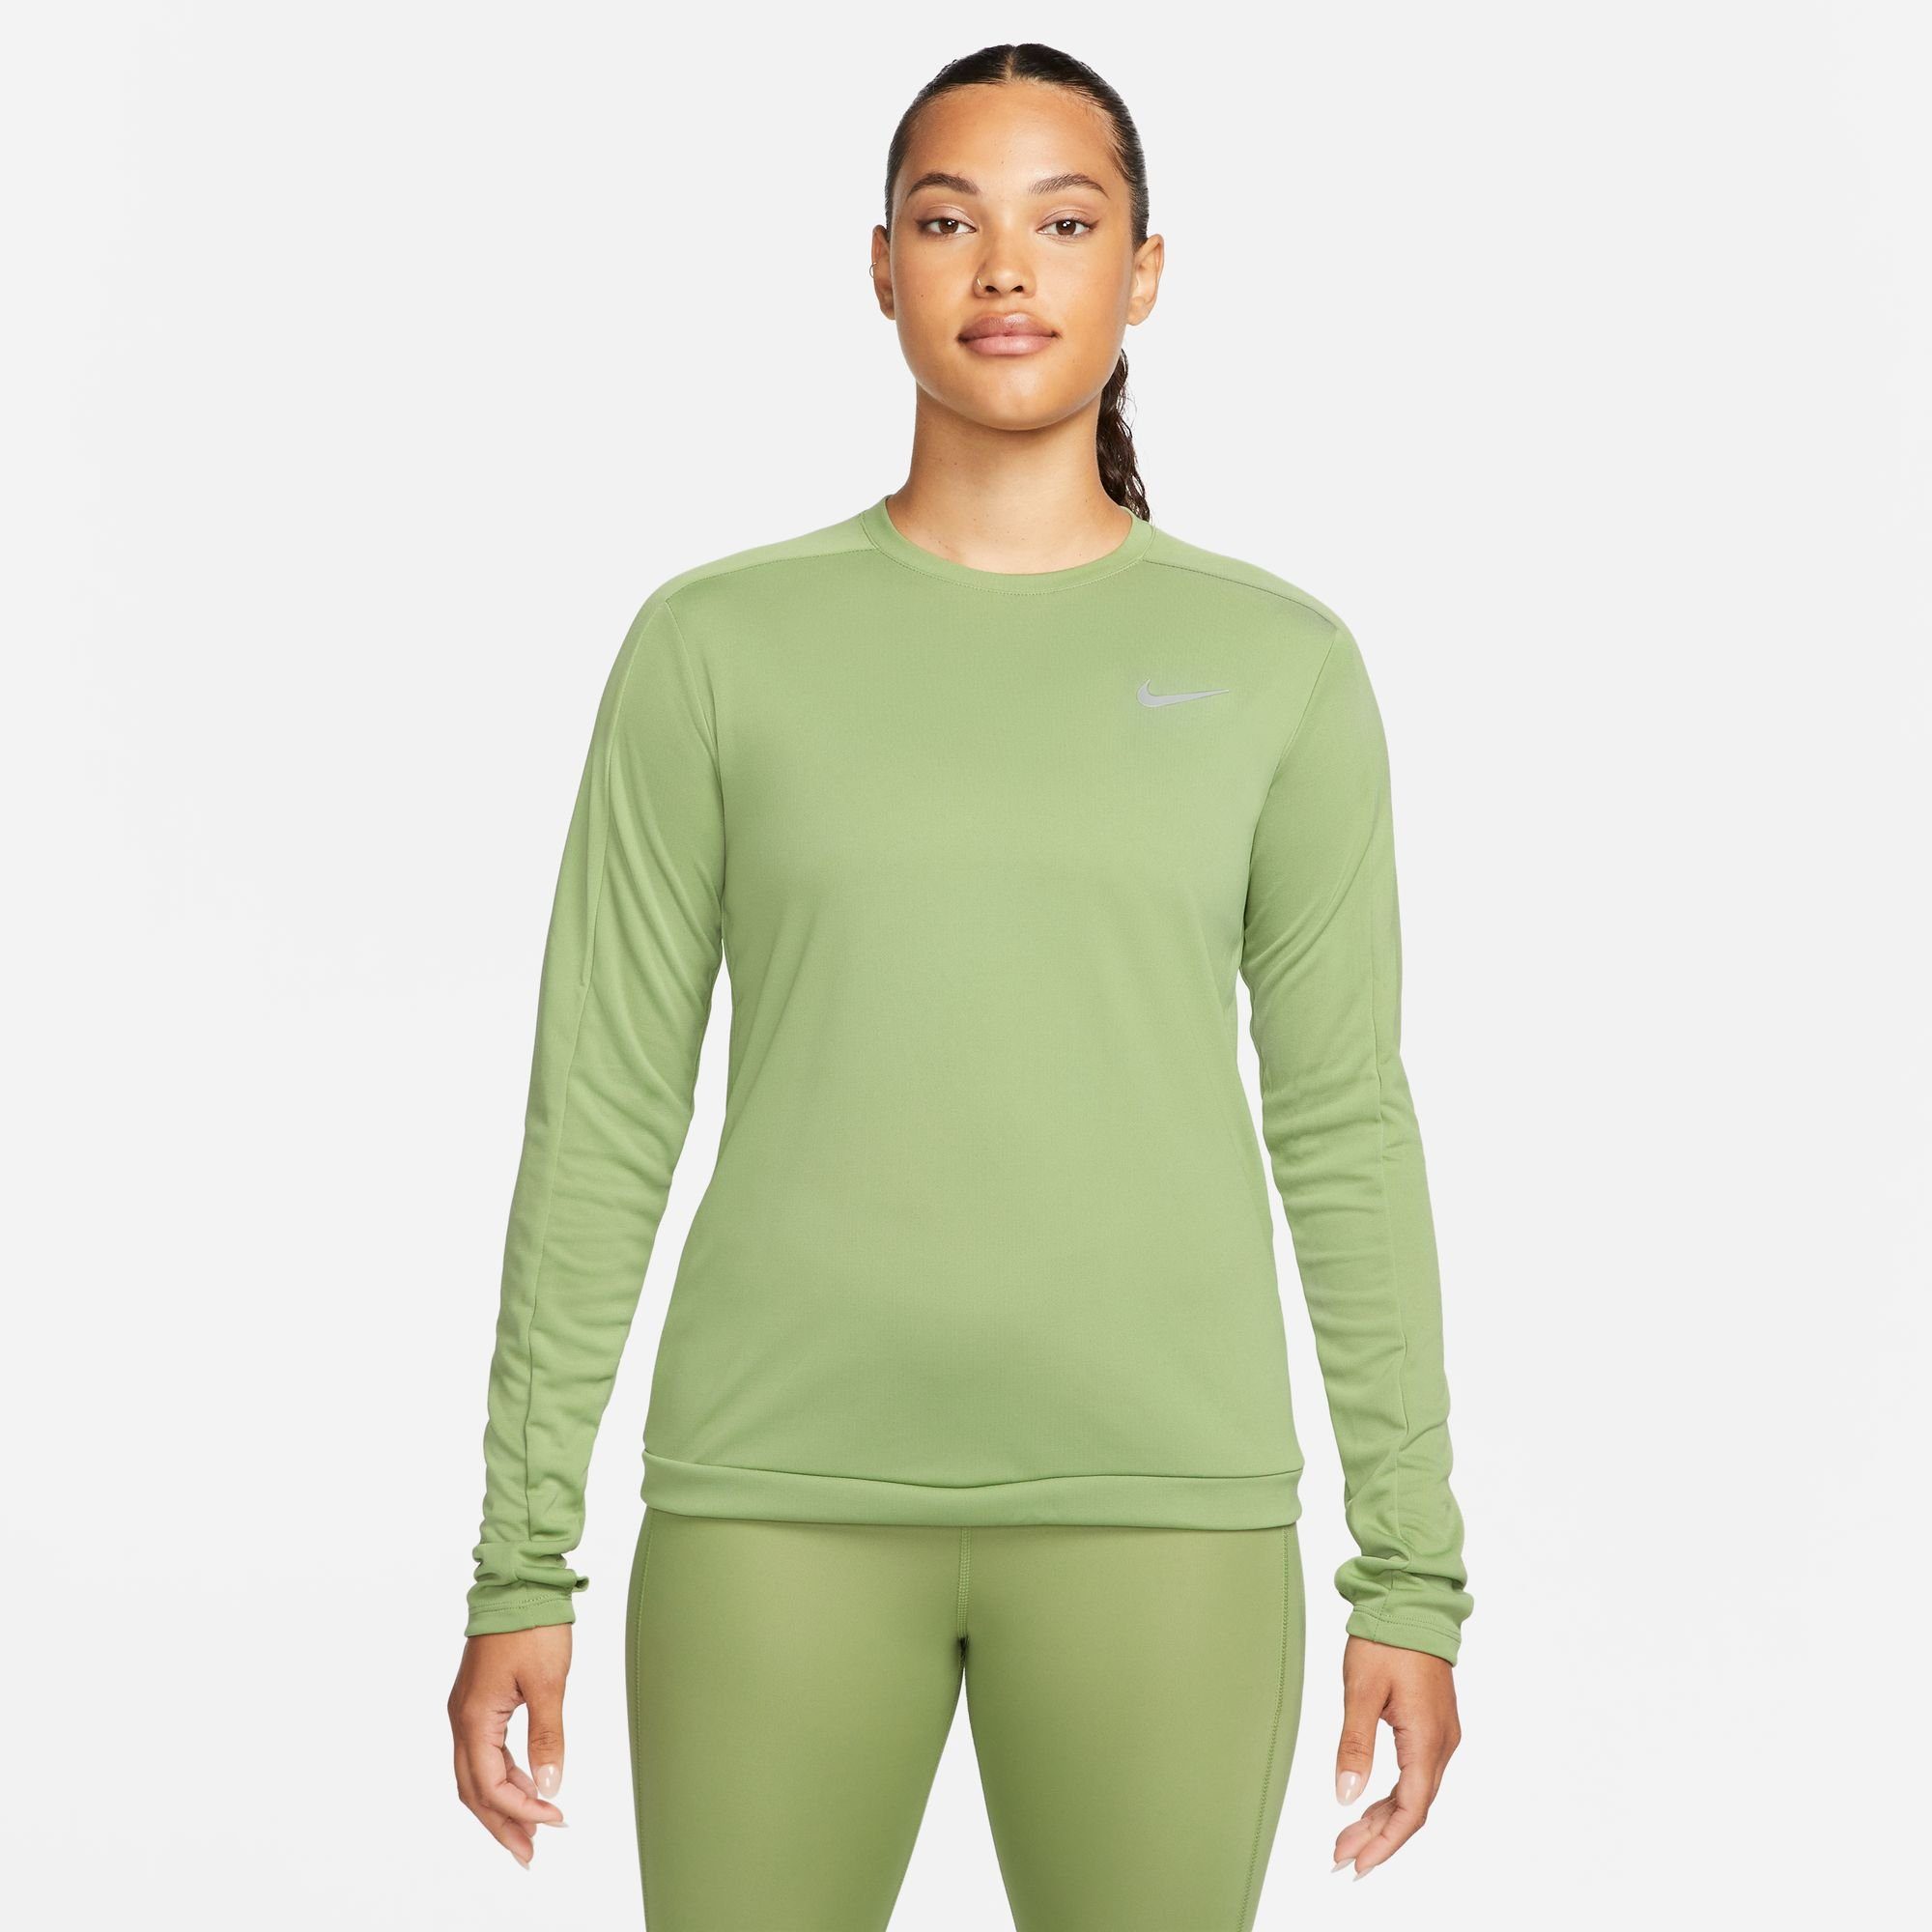 grün RUNNING WOMEN'S TOP Nike CREW-NECK DRI-FIT Laufshirt